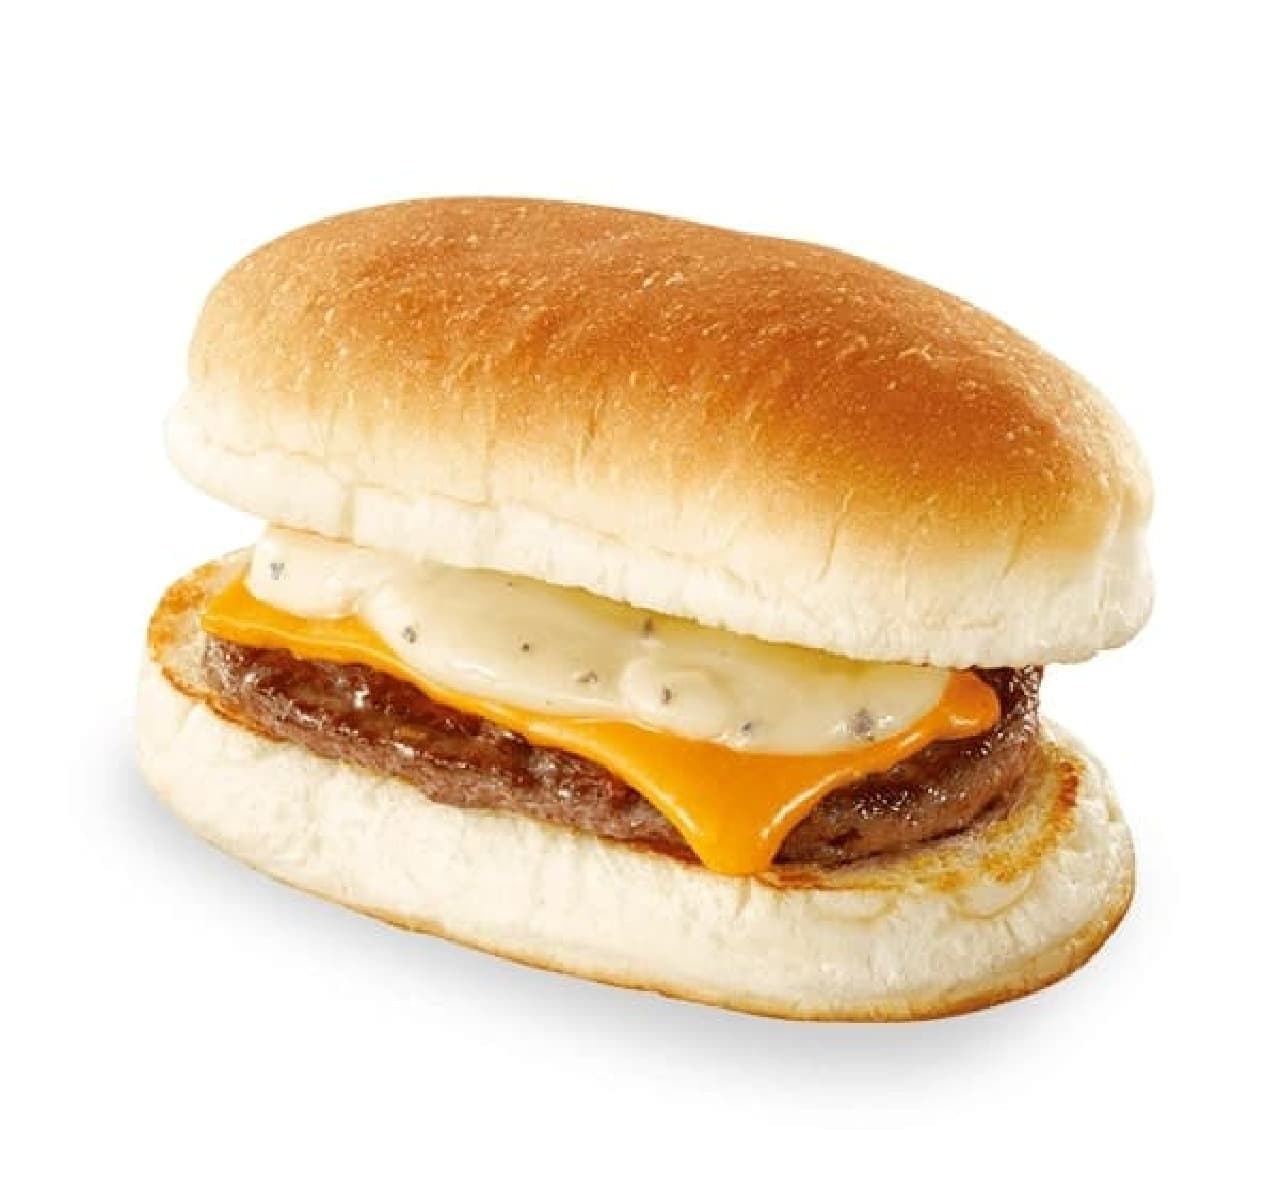 Zetteria "The Best Cheeseburger"